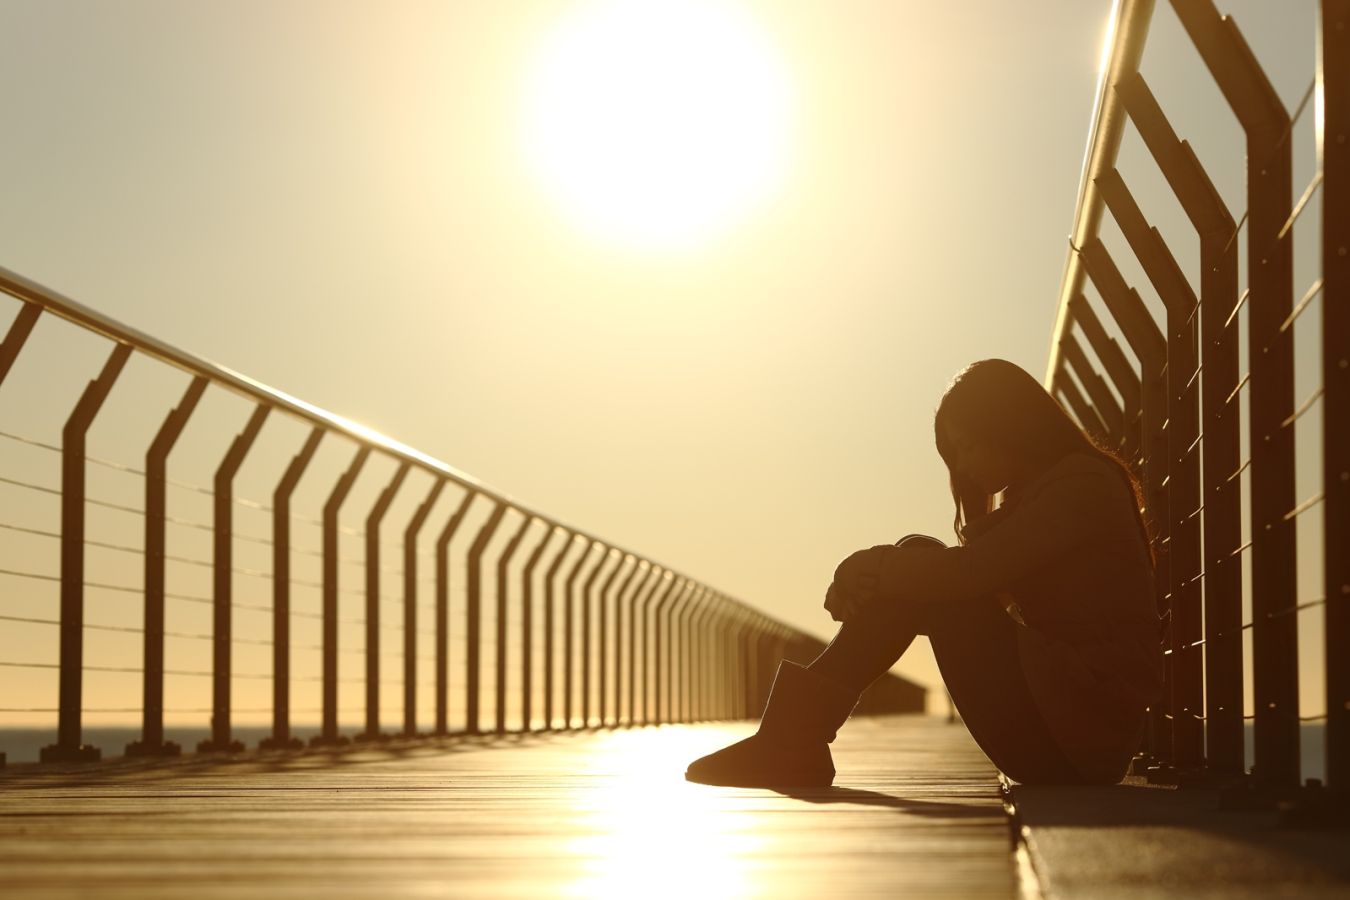 Study on depression could impact future development of anti-depressant medications. Image via Shutterstock.com